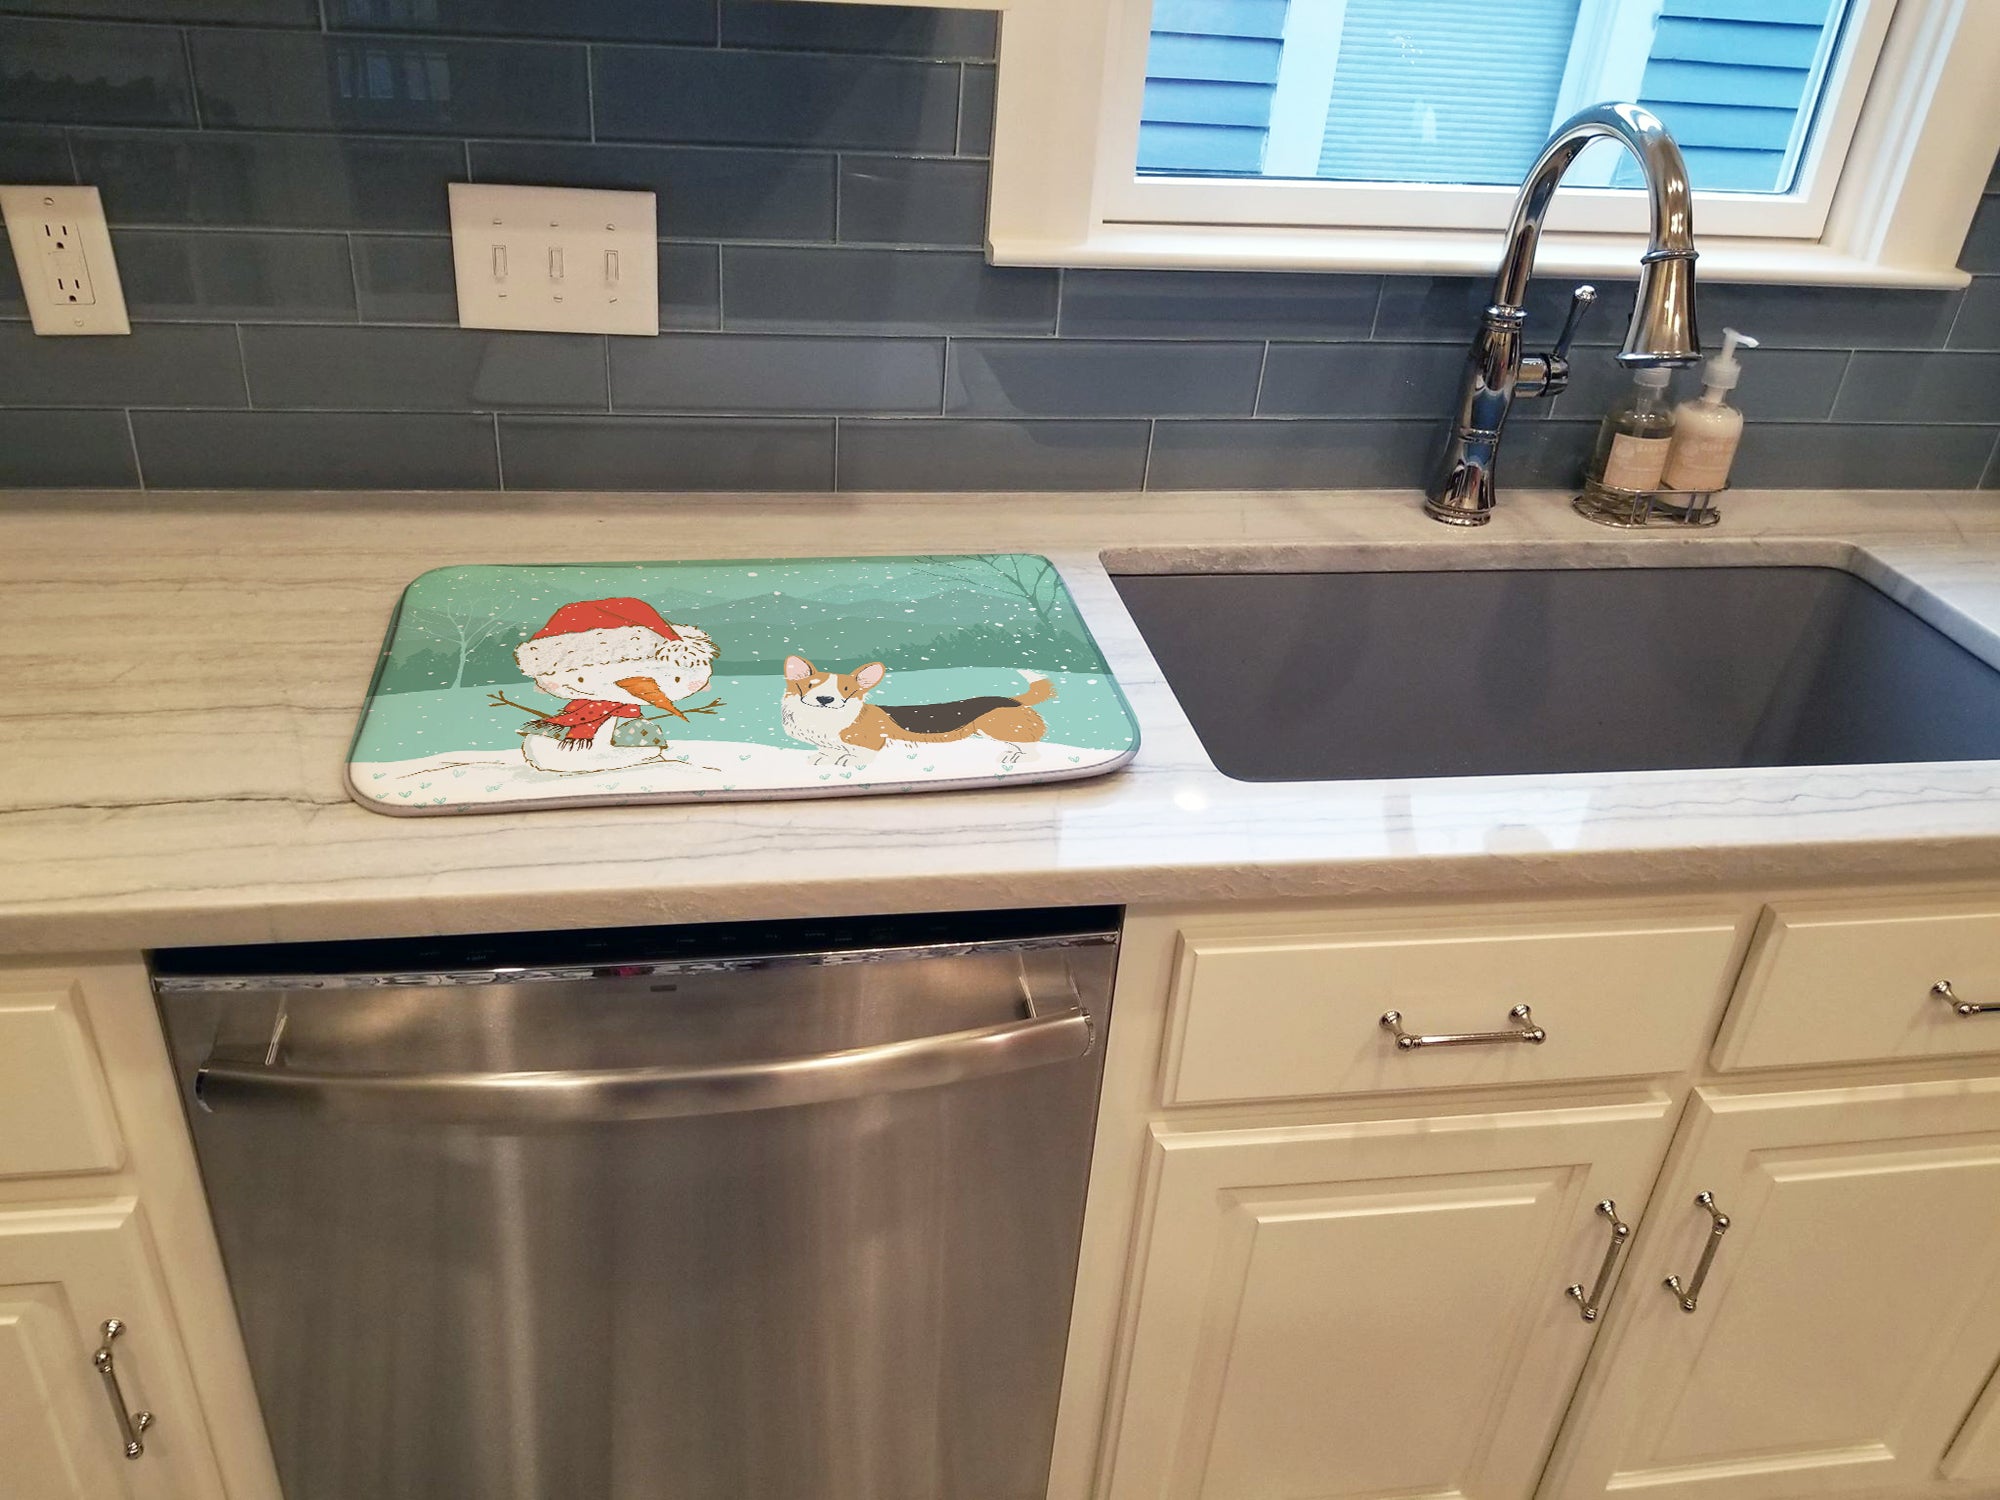 Tricolor Cardigan Corgi Snowman Christmas Dish Drying Mat CK2062DDM